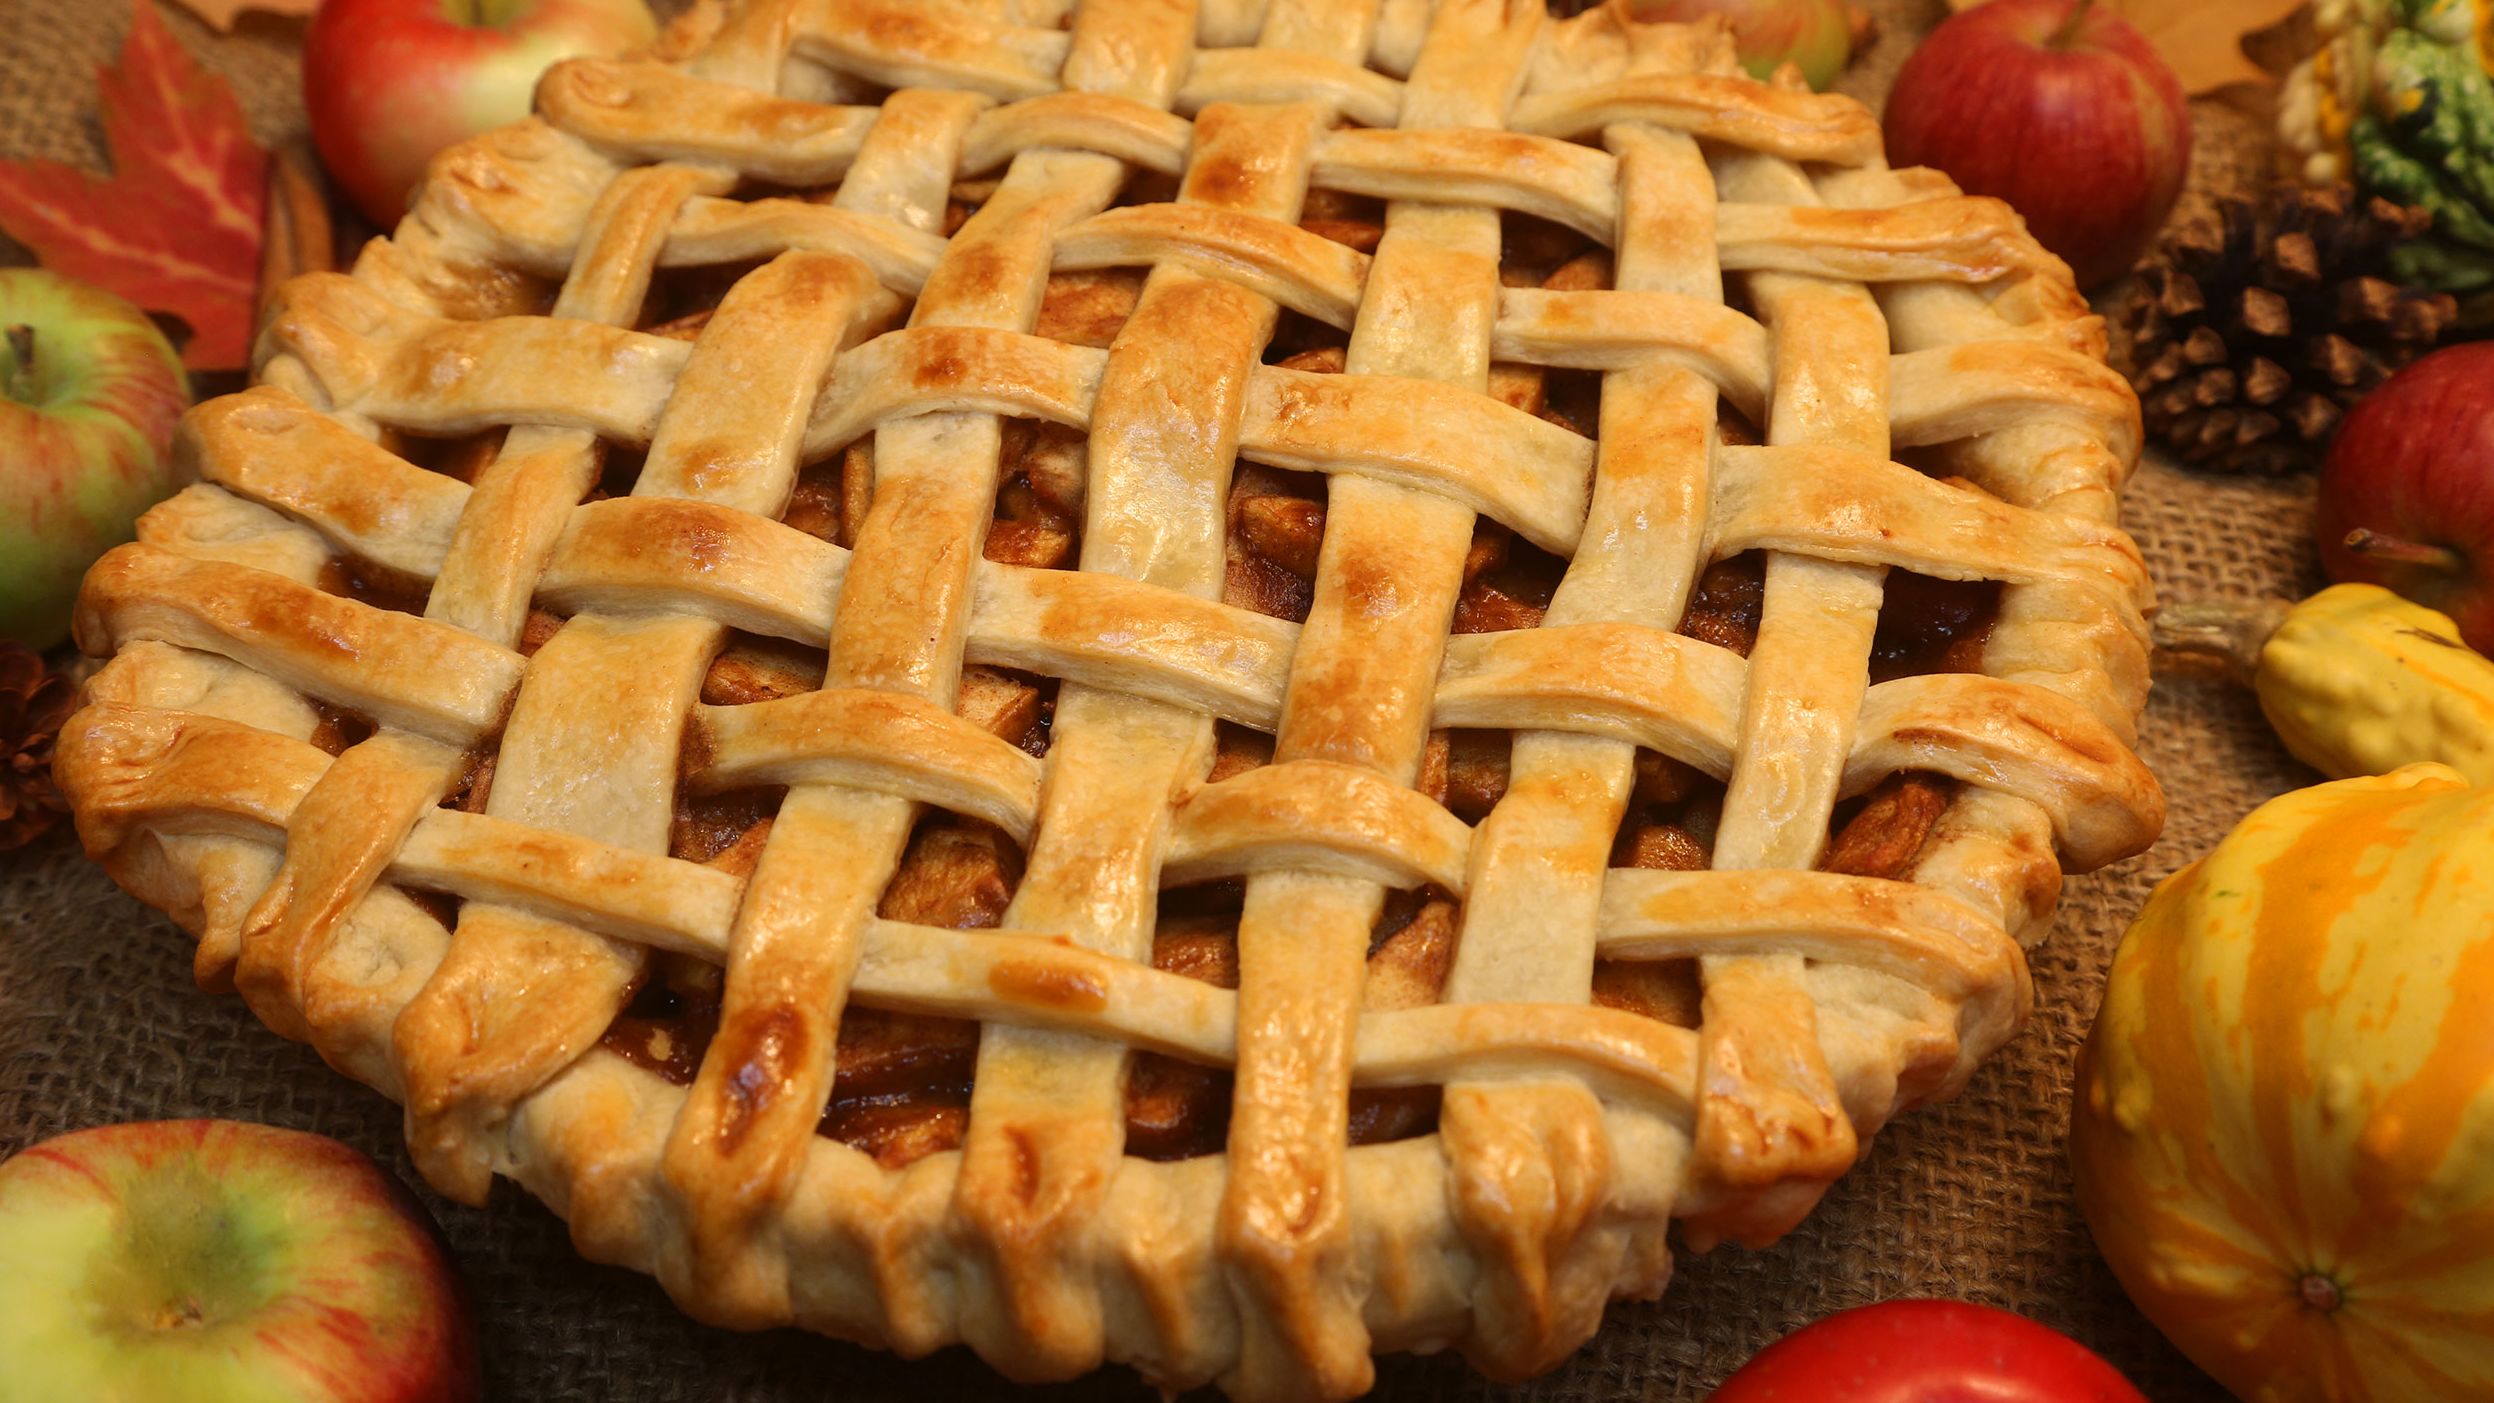 Homemade apple pie amongst an autumn season setting in Toronto, Ontario, Canada, on October 07, 2021. 